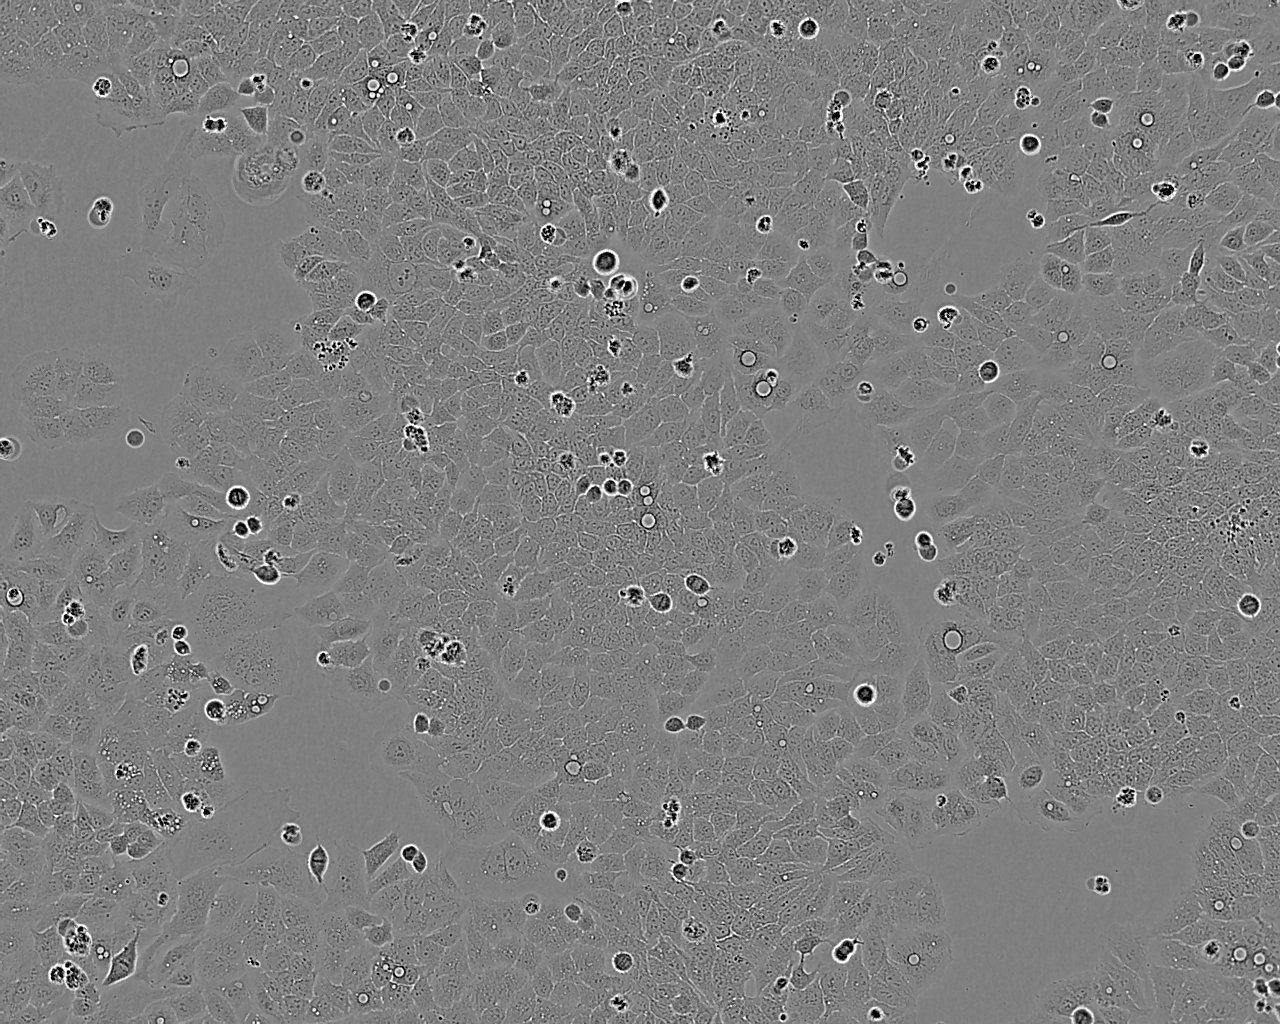 NCI-H1437 人非小细胞肺癌细胞系,NCI-H1437